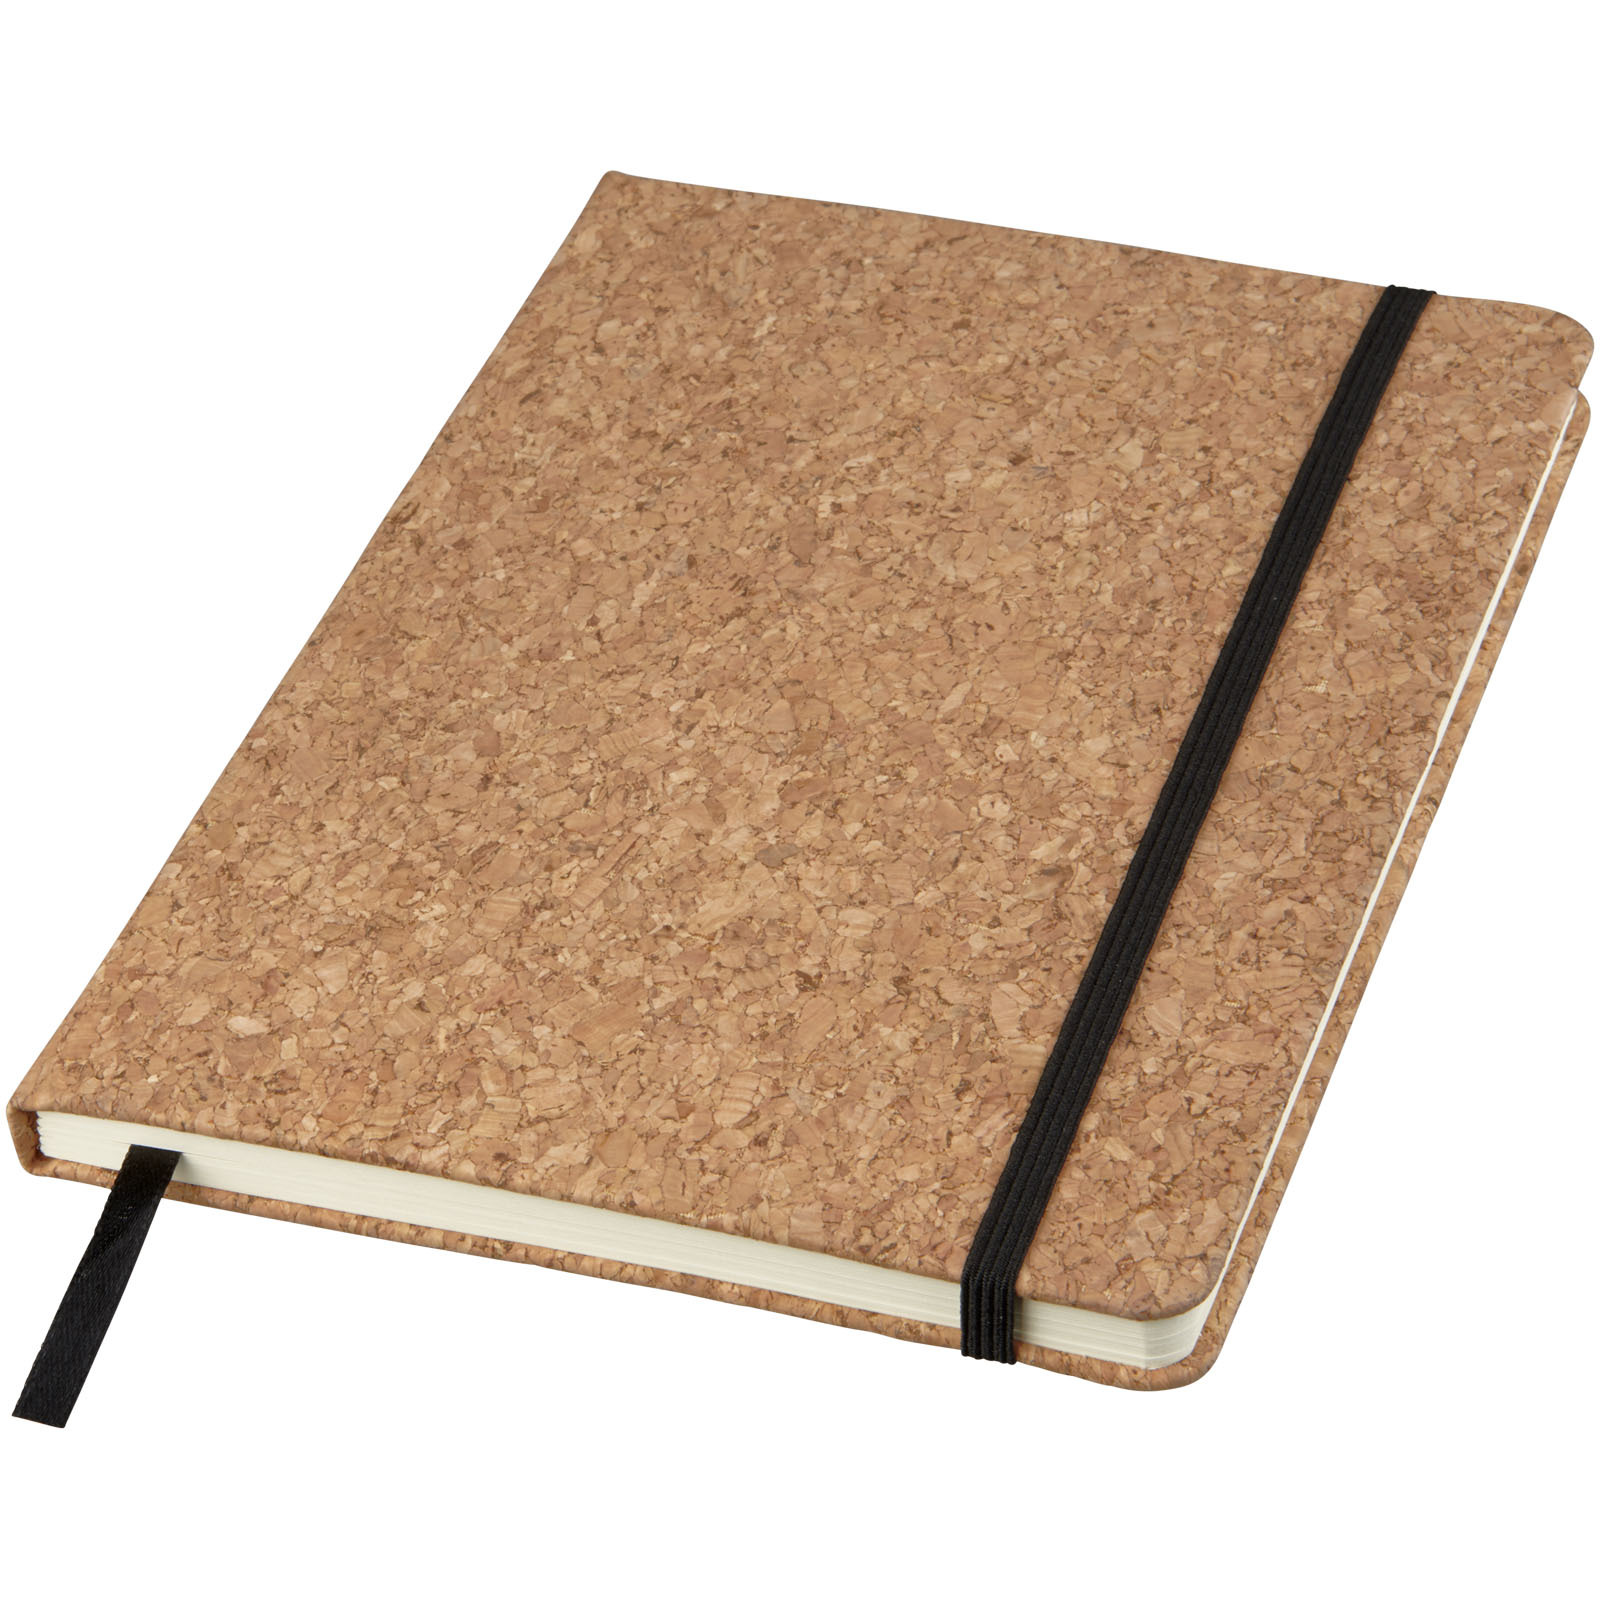 Hard cover notebooks - Napa A5 cork notebook